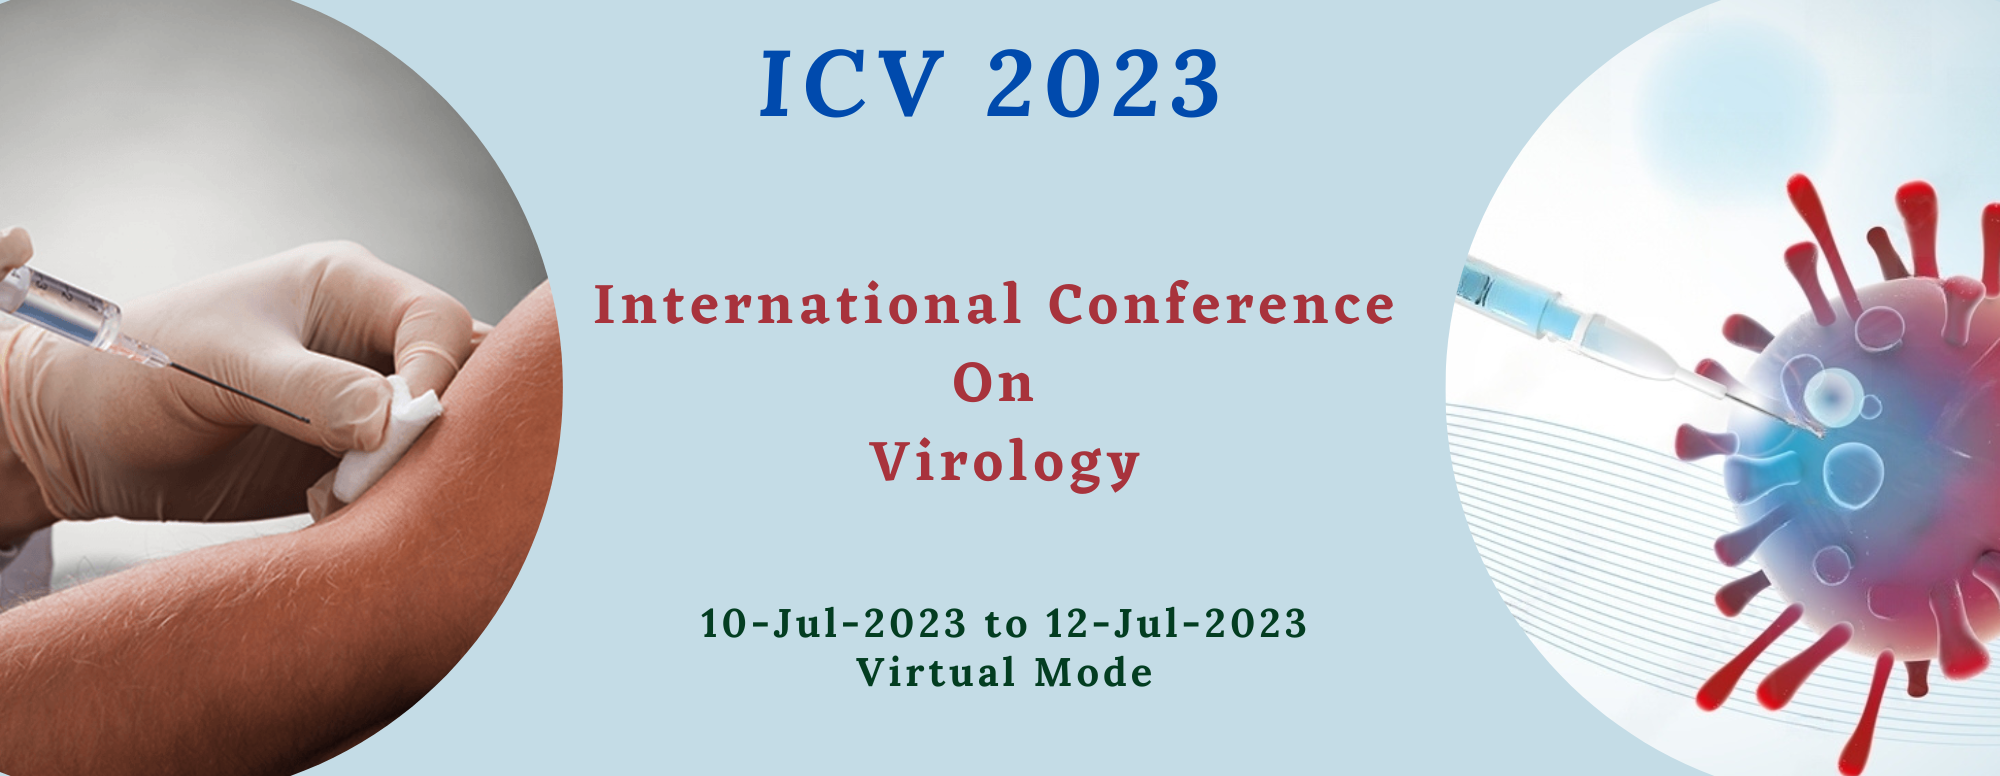 International Conference on Virology